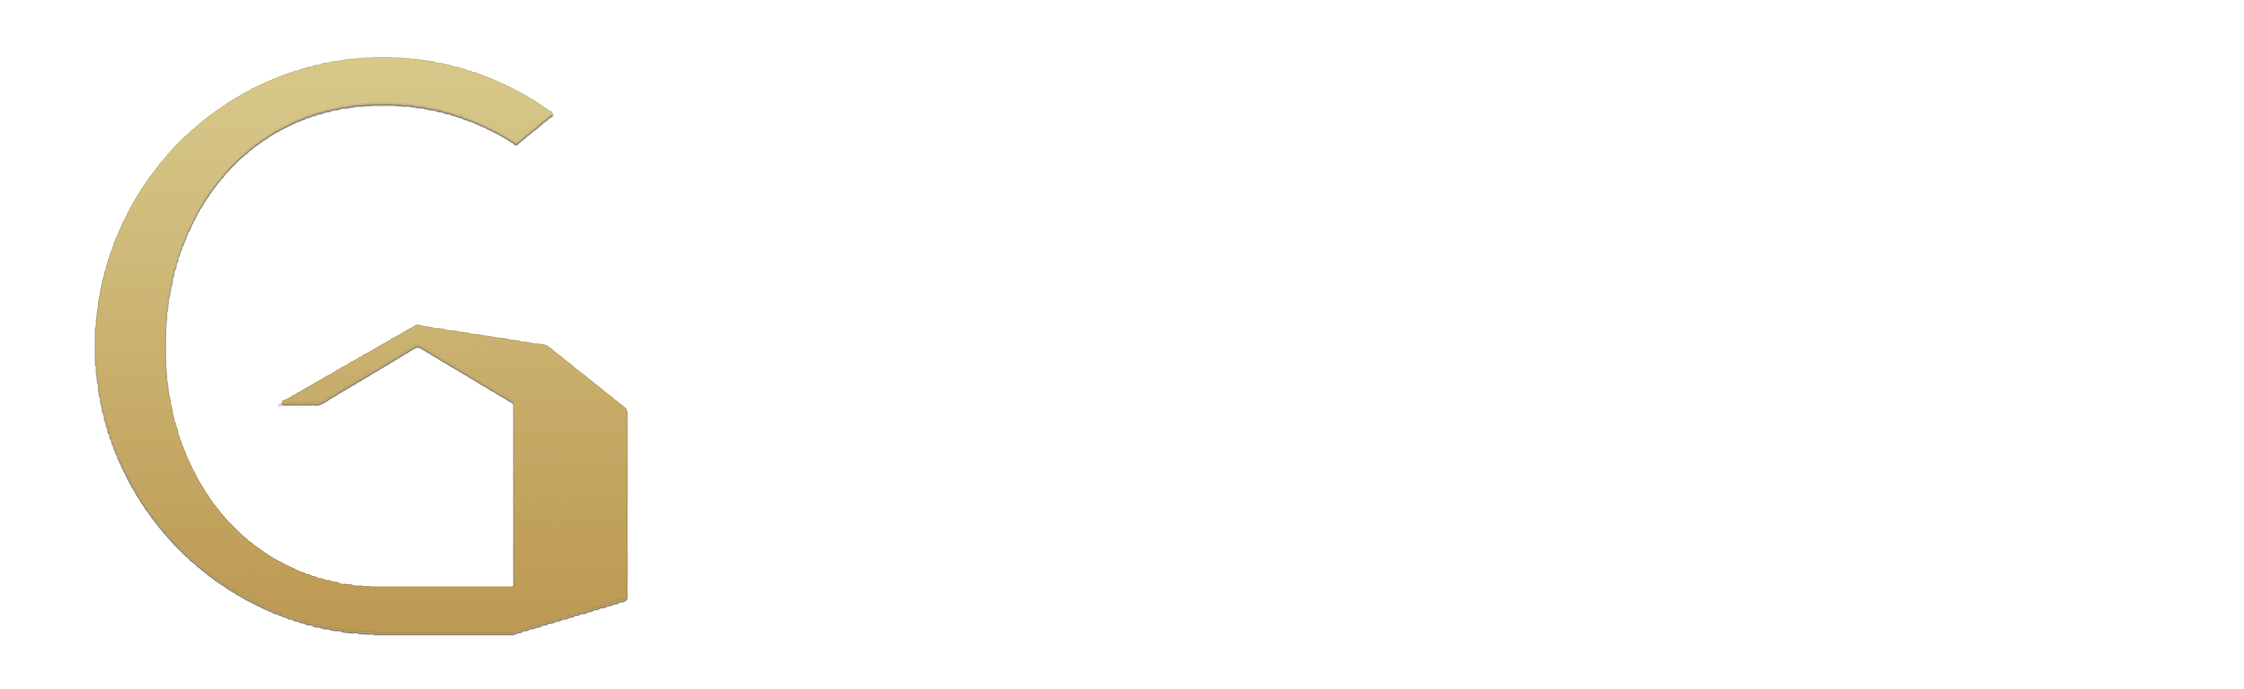 GLASS HOME